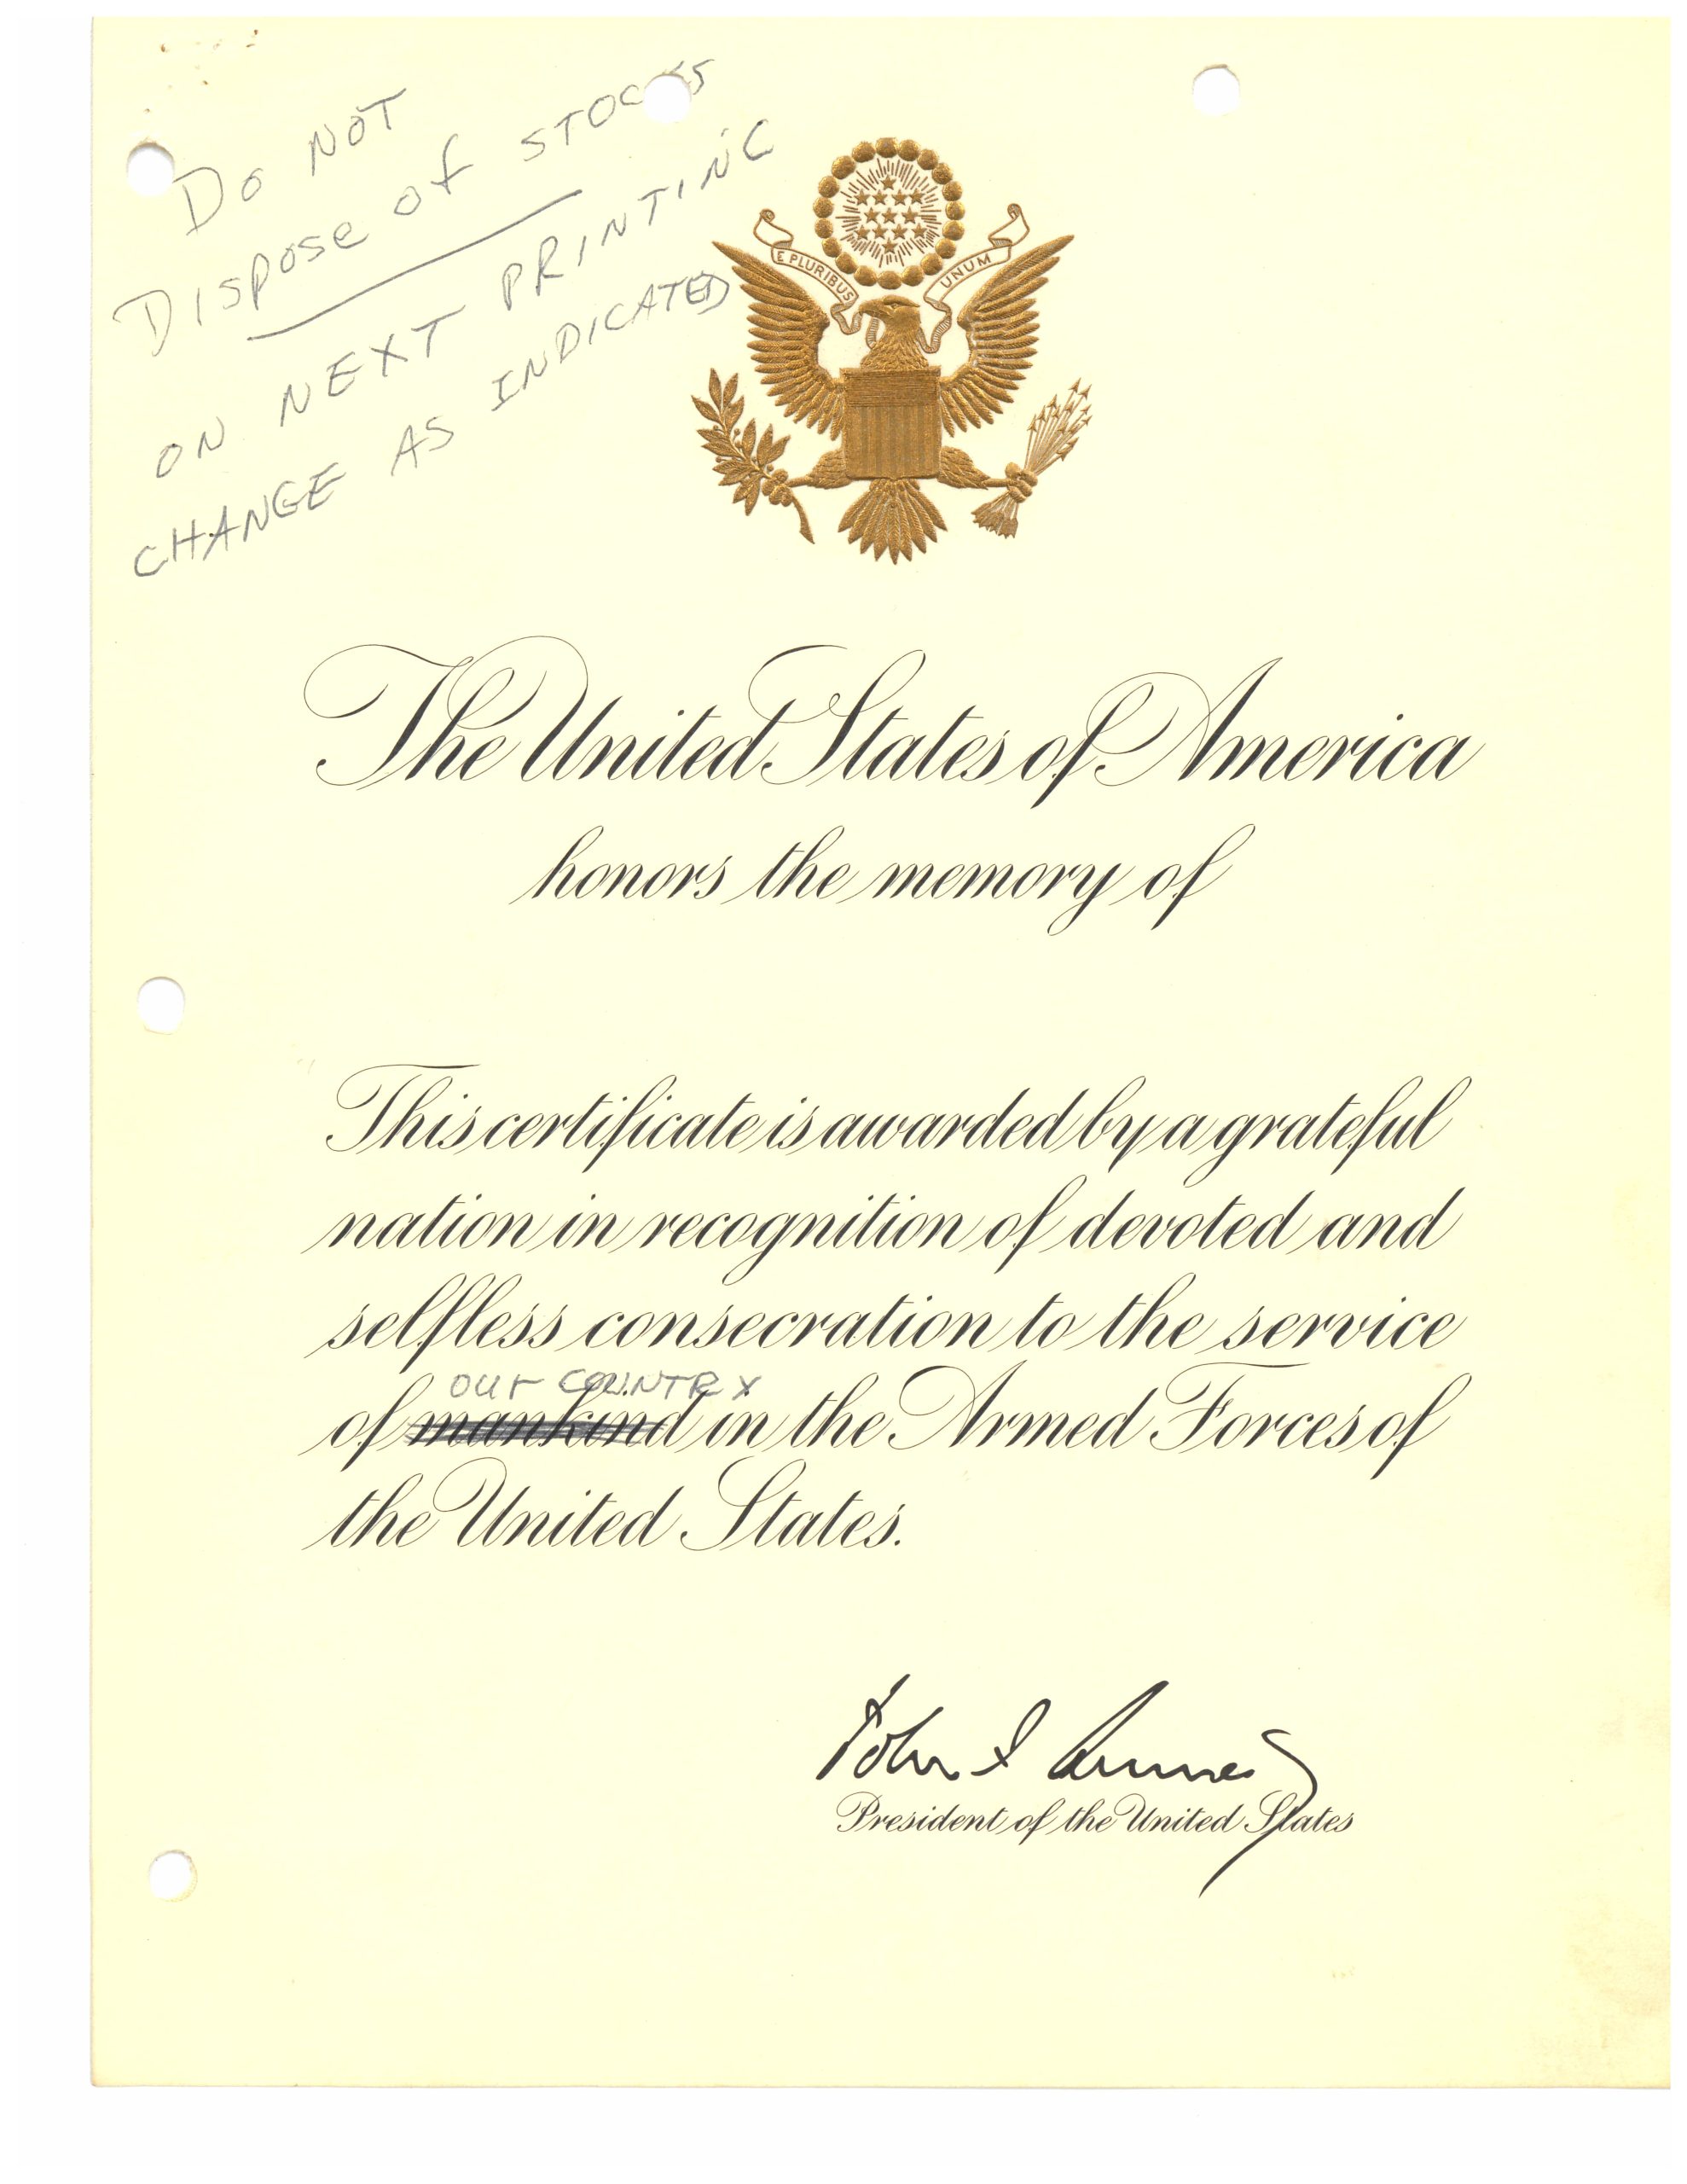 Read Object 73: Presidential Memorial Certificate